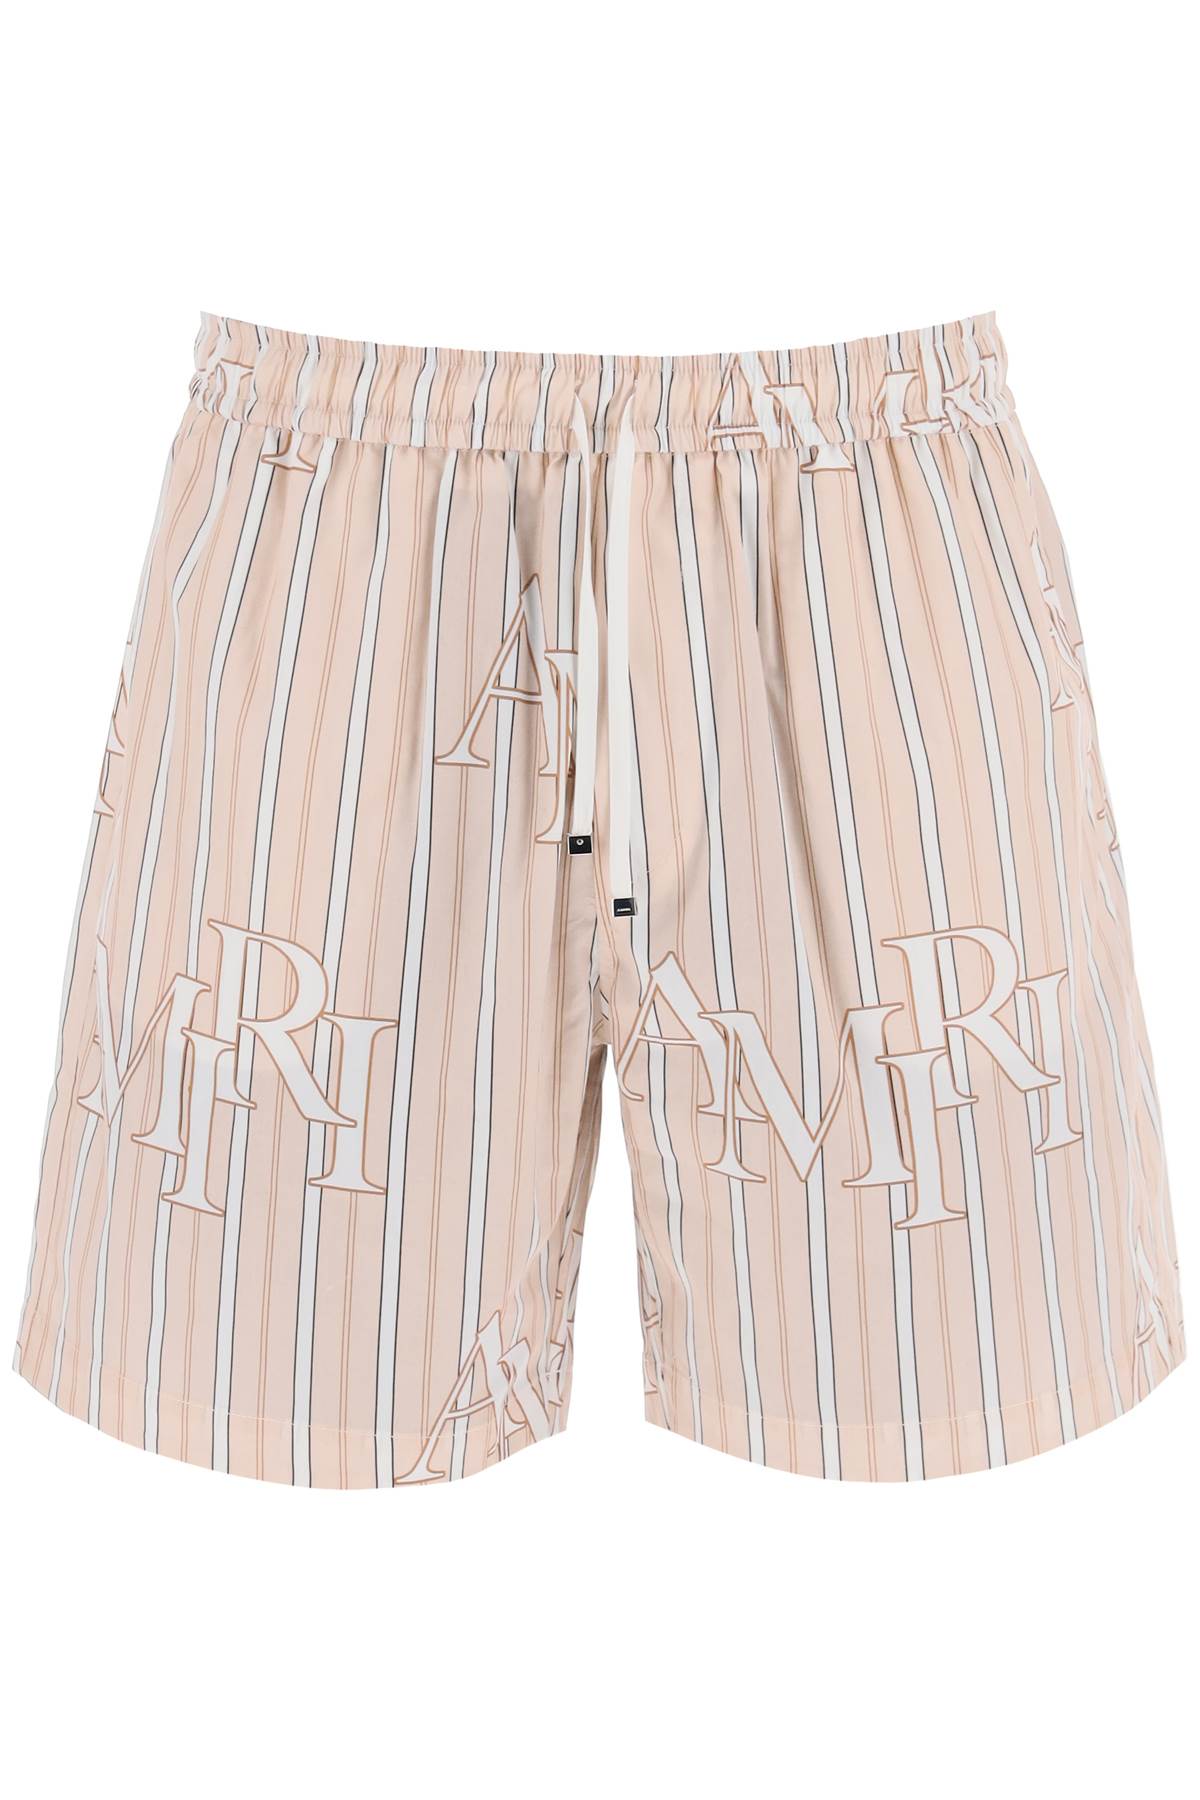 Amiri stripe technical poplin bermuda shorts with logo

"striped-0